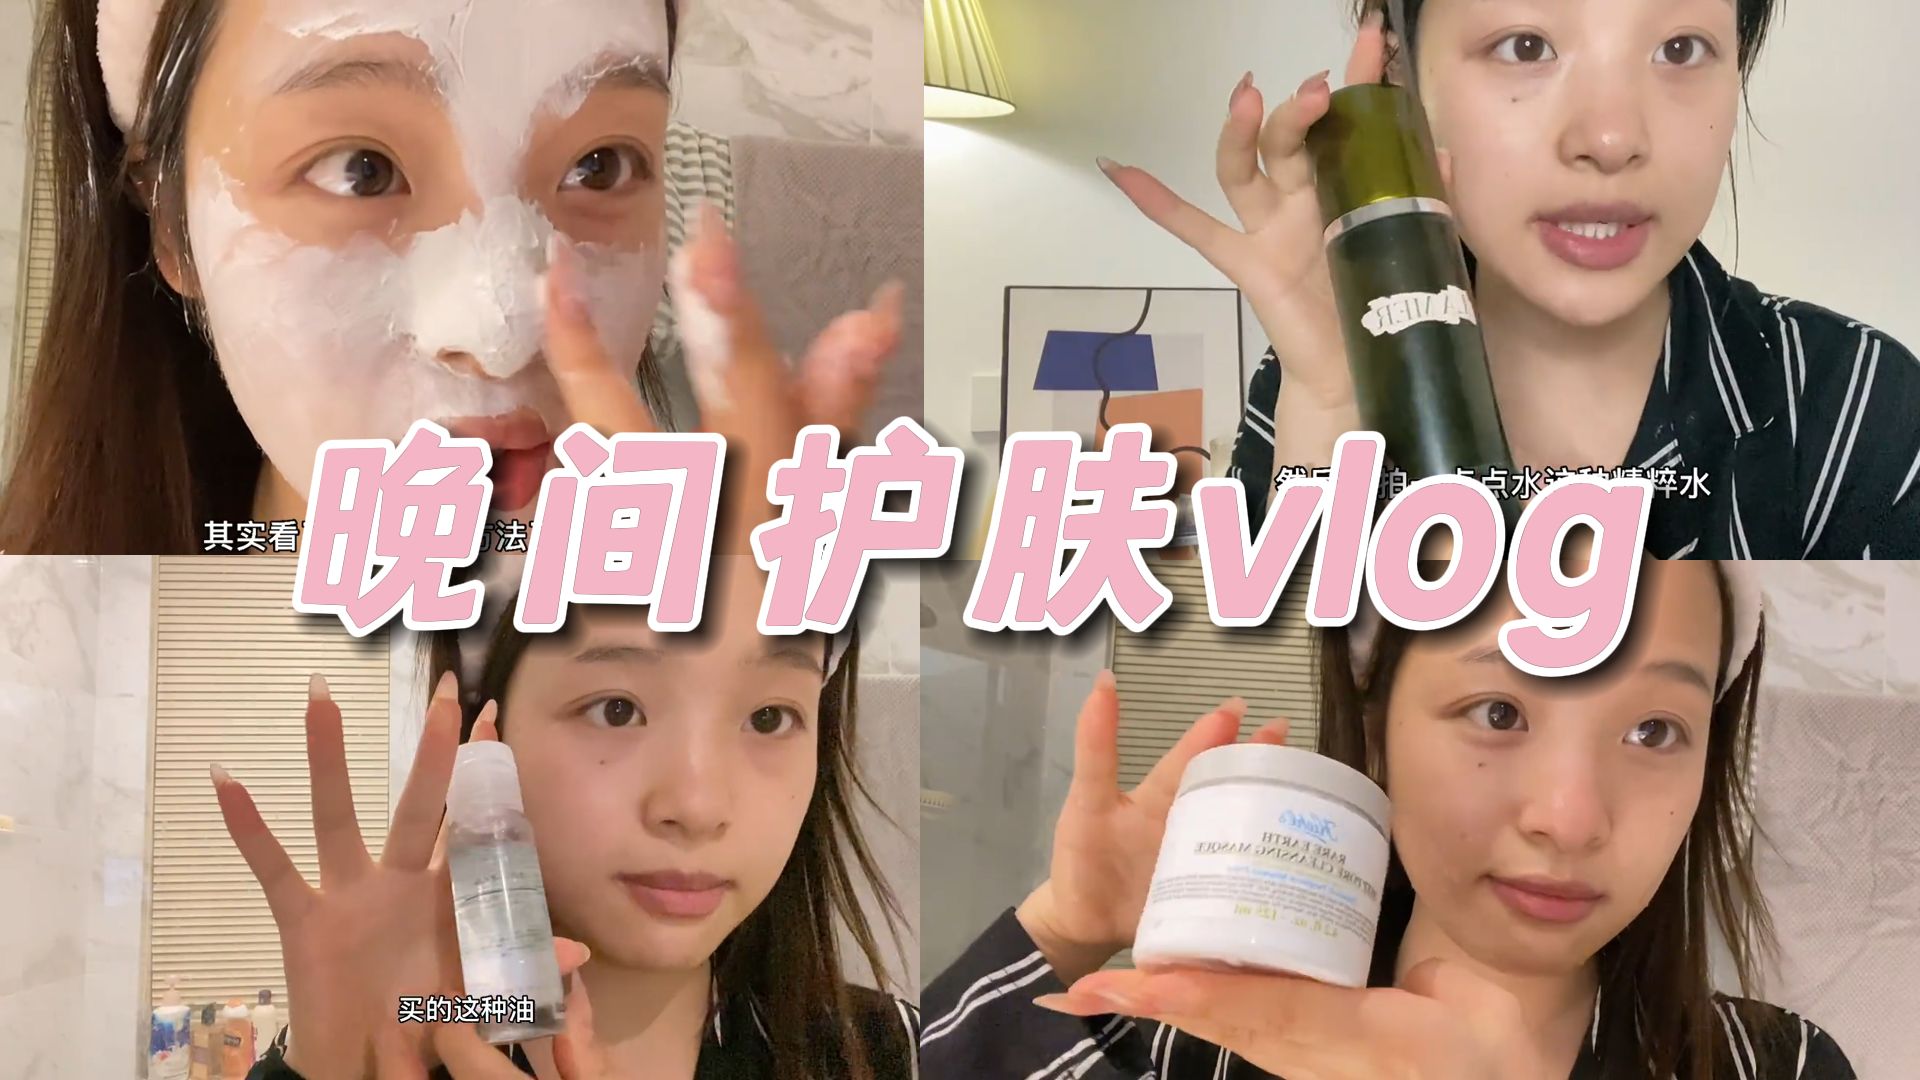 Vlog|24岁女孩如何保持少女感 |晚间护肤